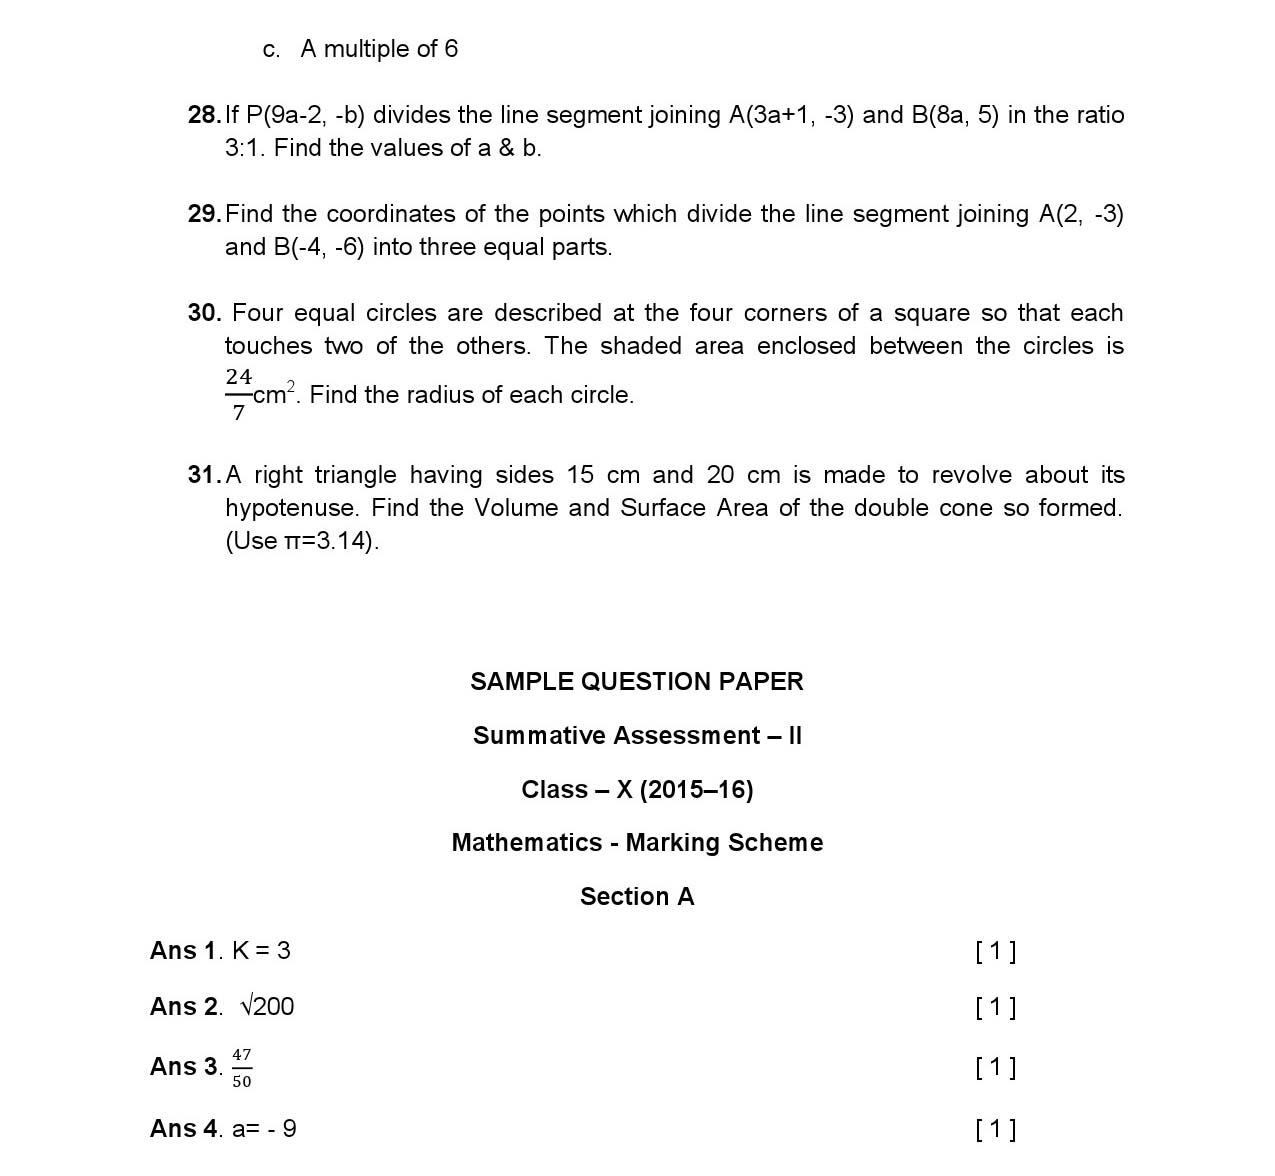 Mathematics CBSE Class X Sample Question Paper 2015 16 - Image 5